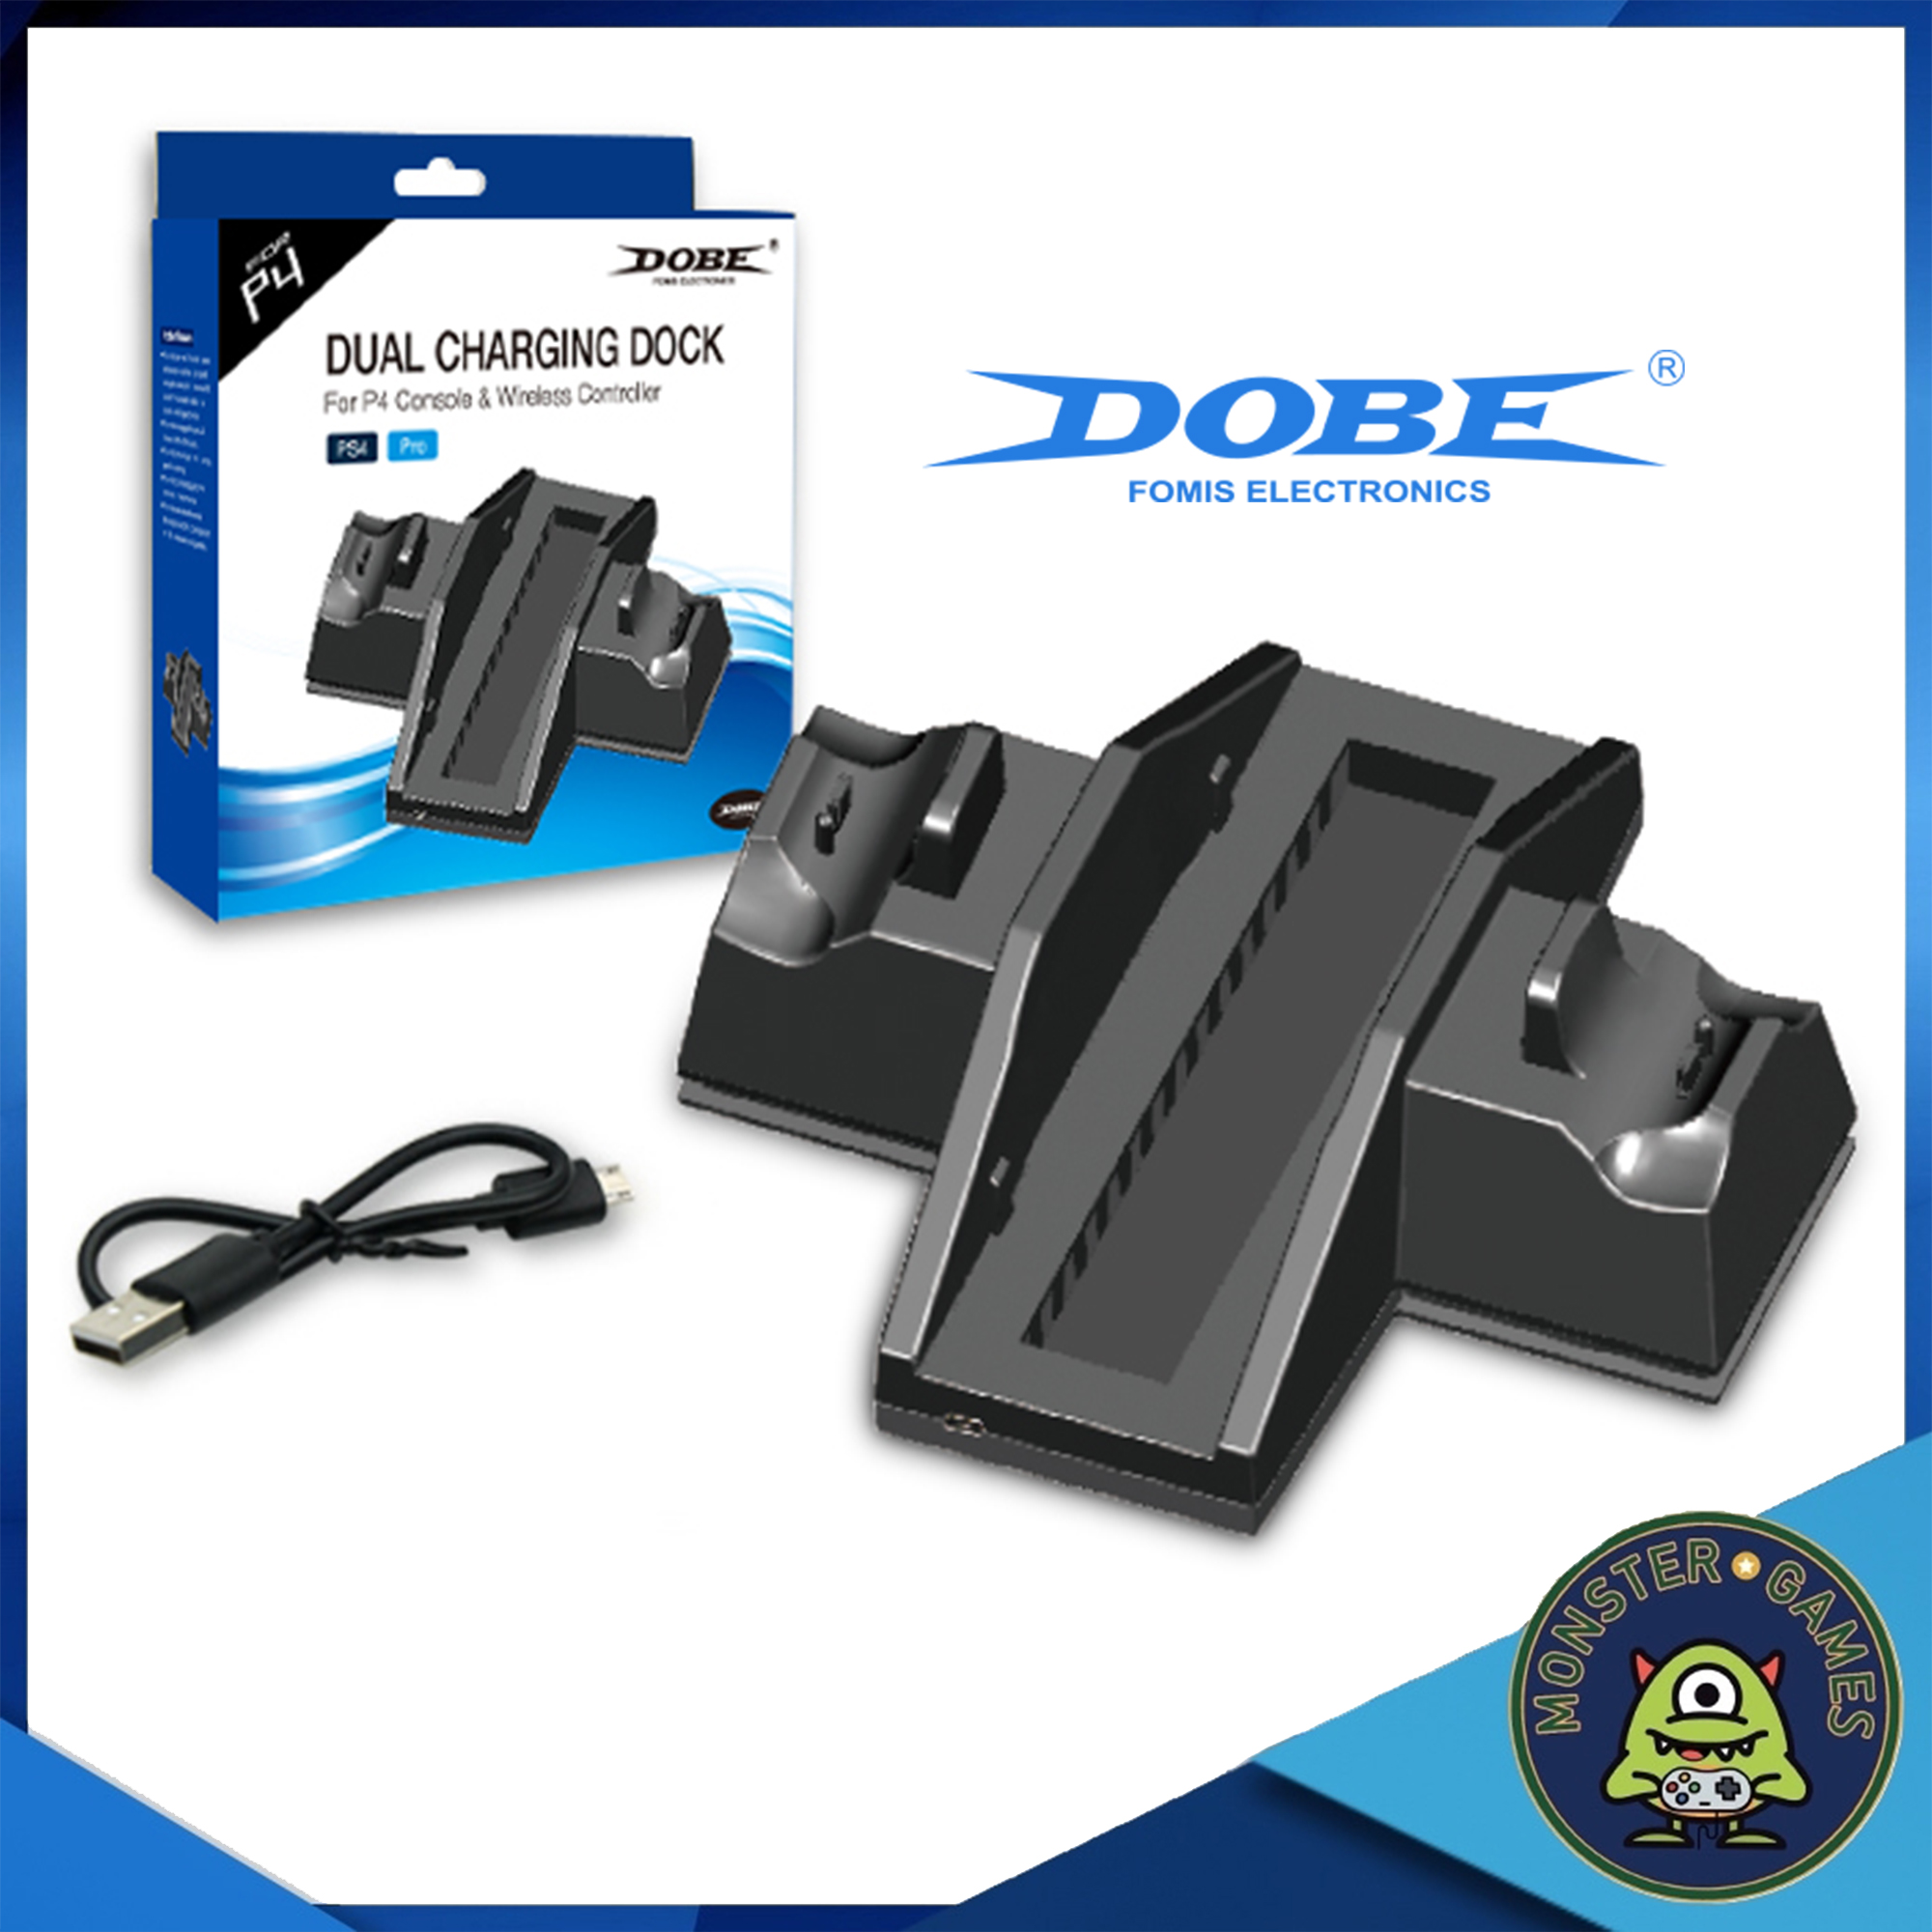 Dobe Charging Dock for PS4 Slim & Wireless Controller (Dobe)(Dobe PS4 Pro)(PS4 Pro charging dock)(แท่นชาร์จจอย PS4 Pro)(แท่นชาร์จจอย PS4)